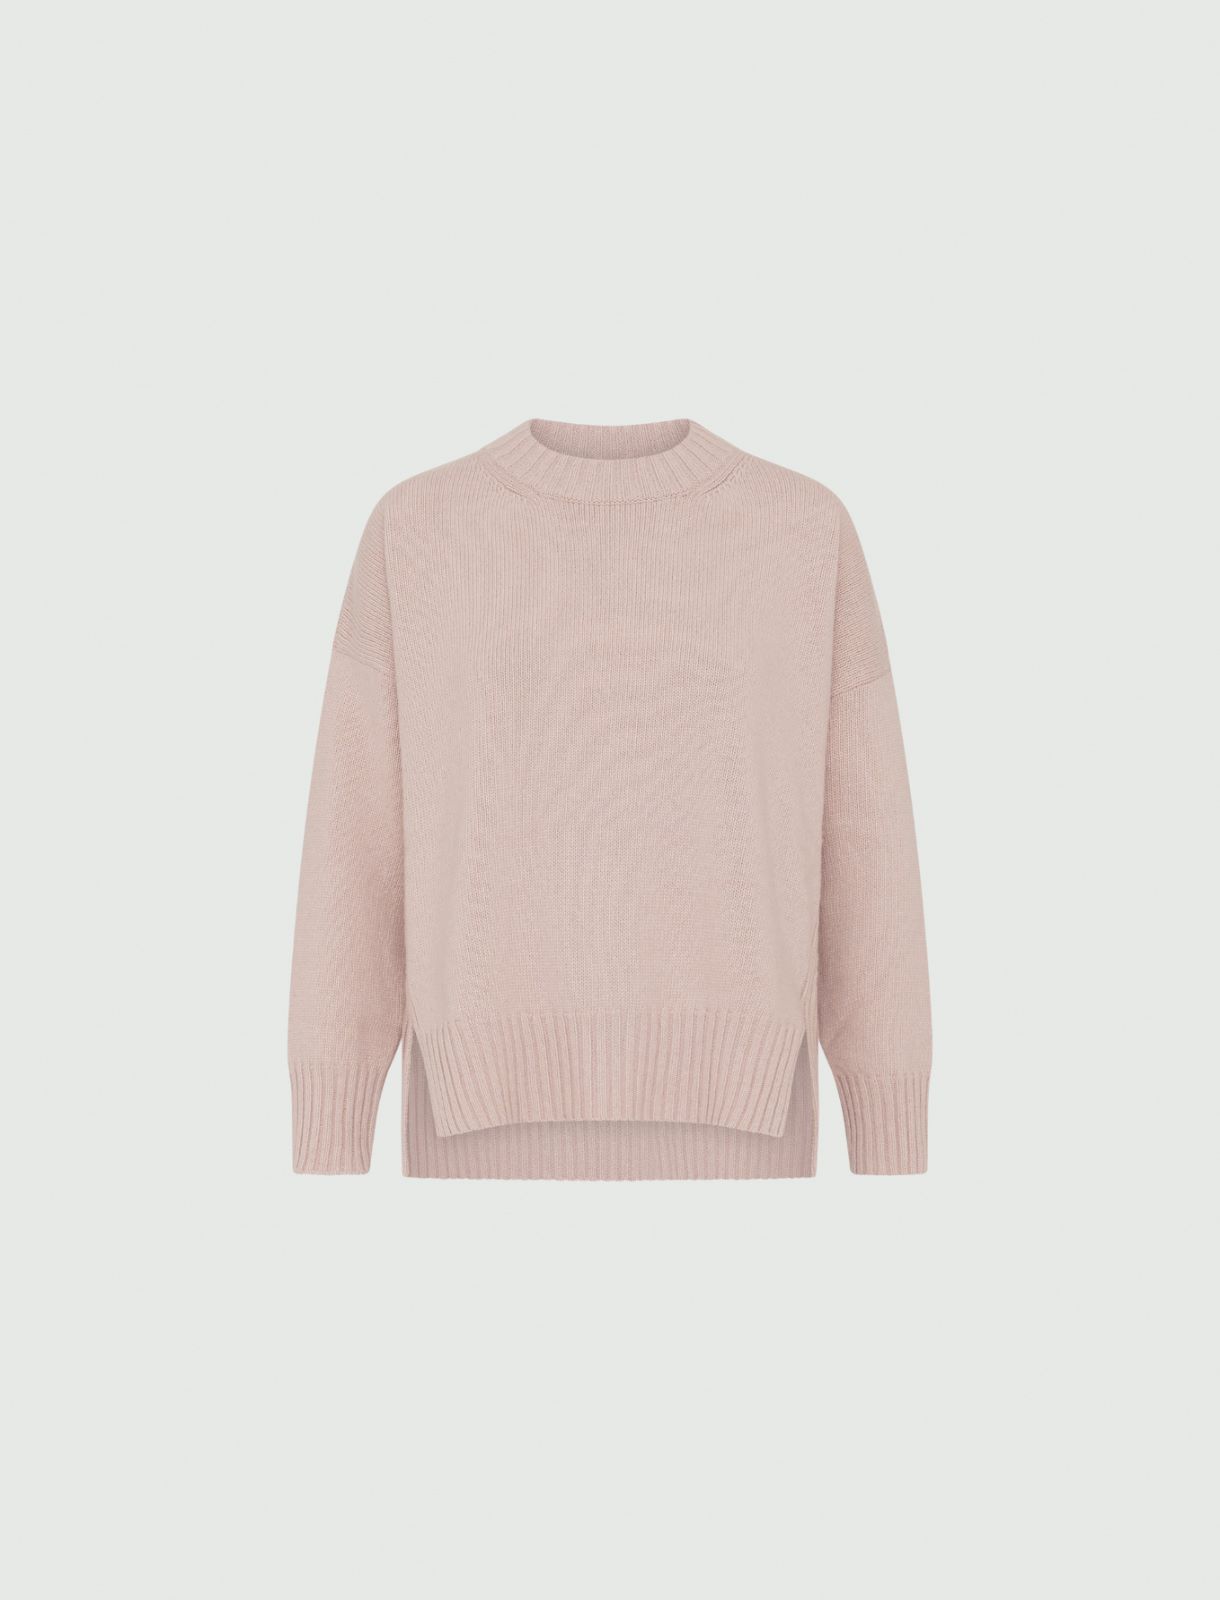 Cashmere-blend sweater - Nudo - Marella - 5